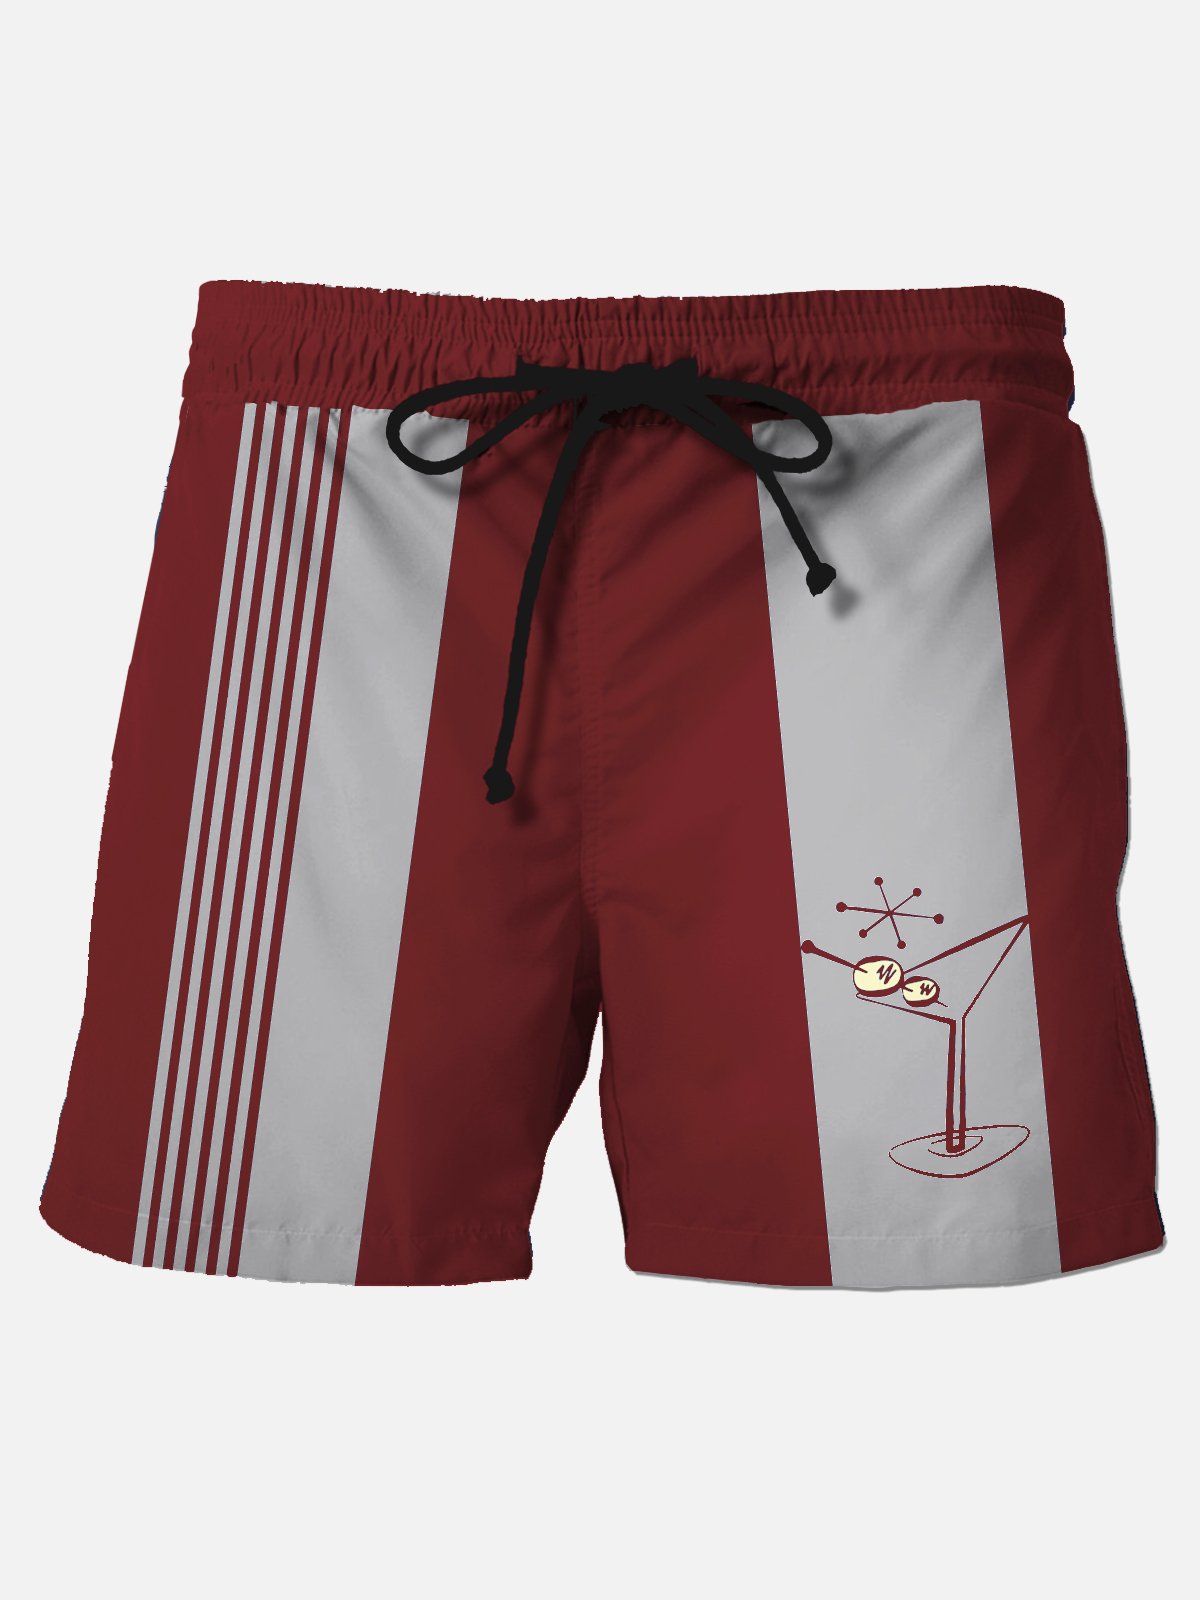 Royaura® Men's Vintage Cocktail Bowling Print Beach Shorts